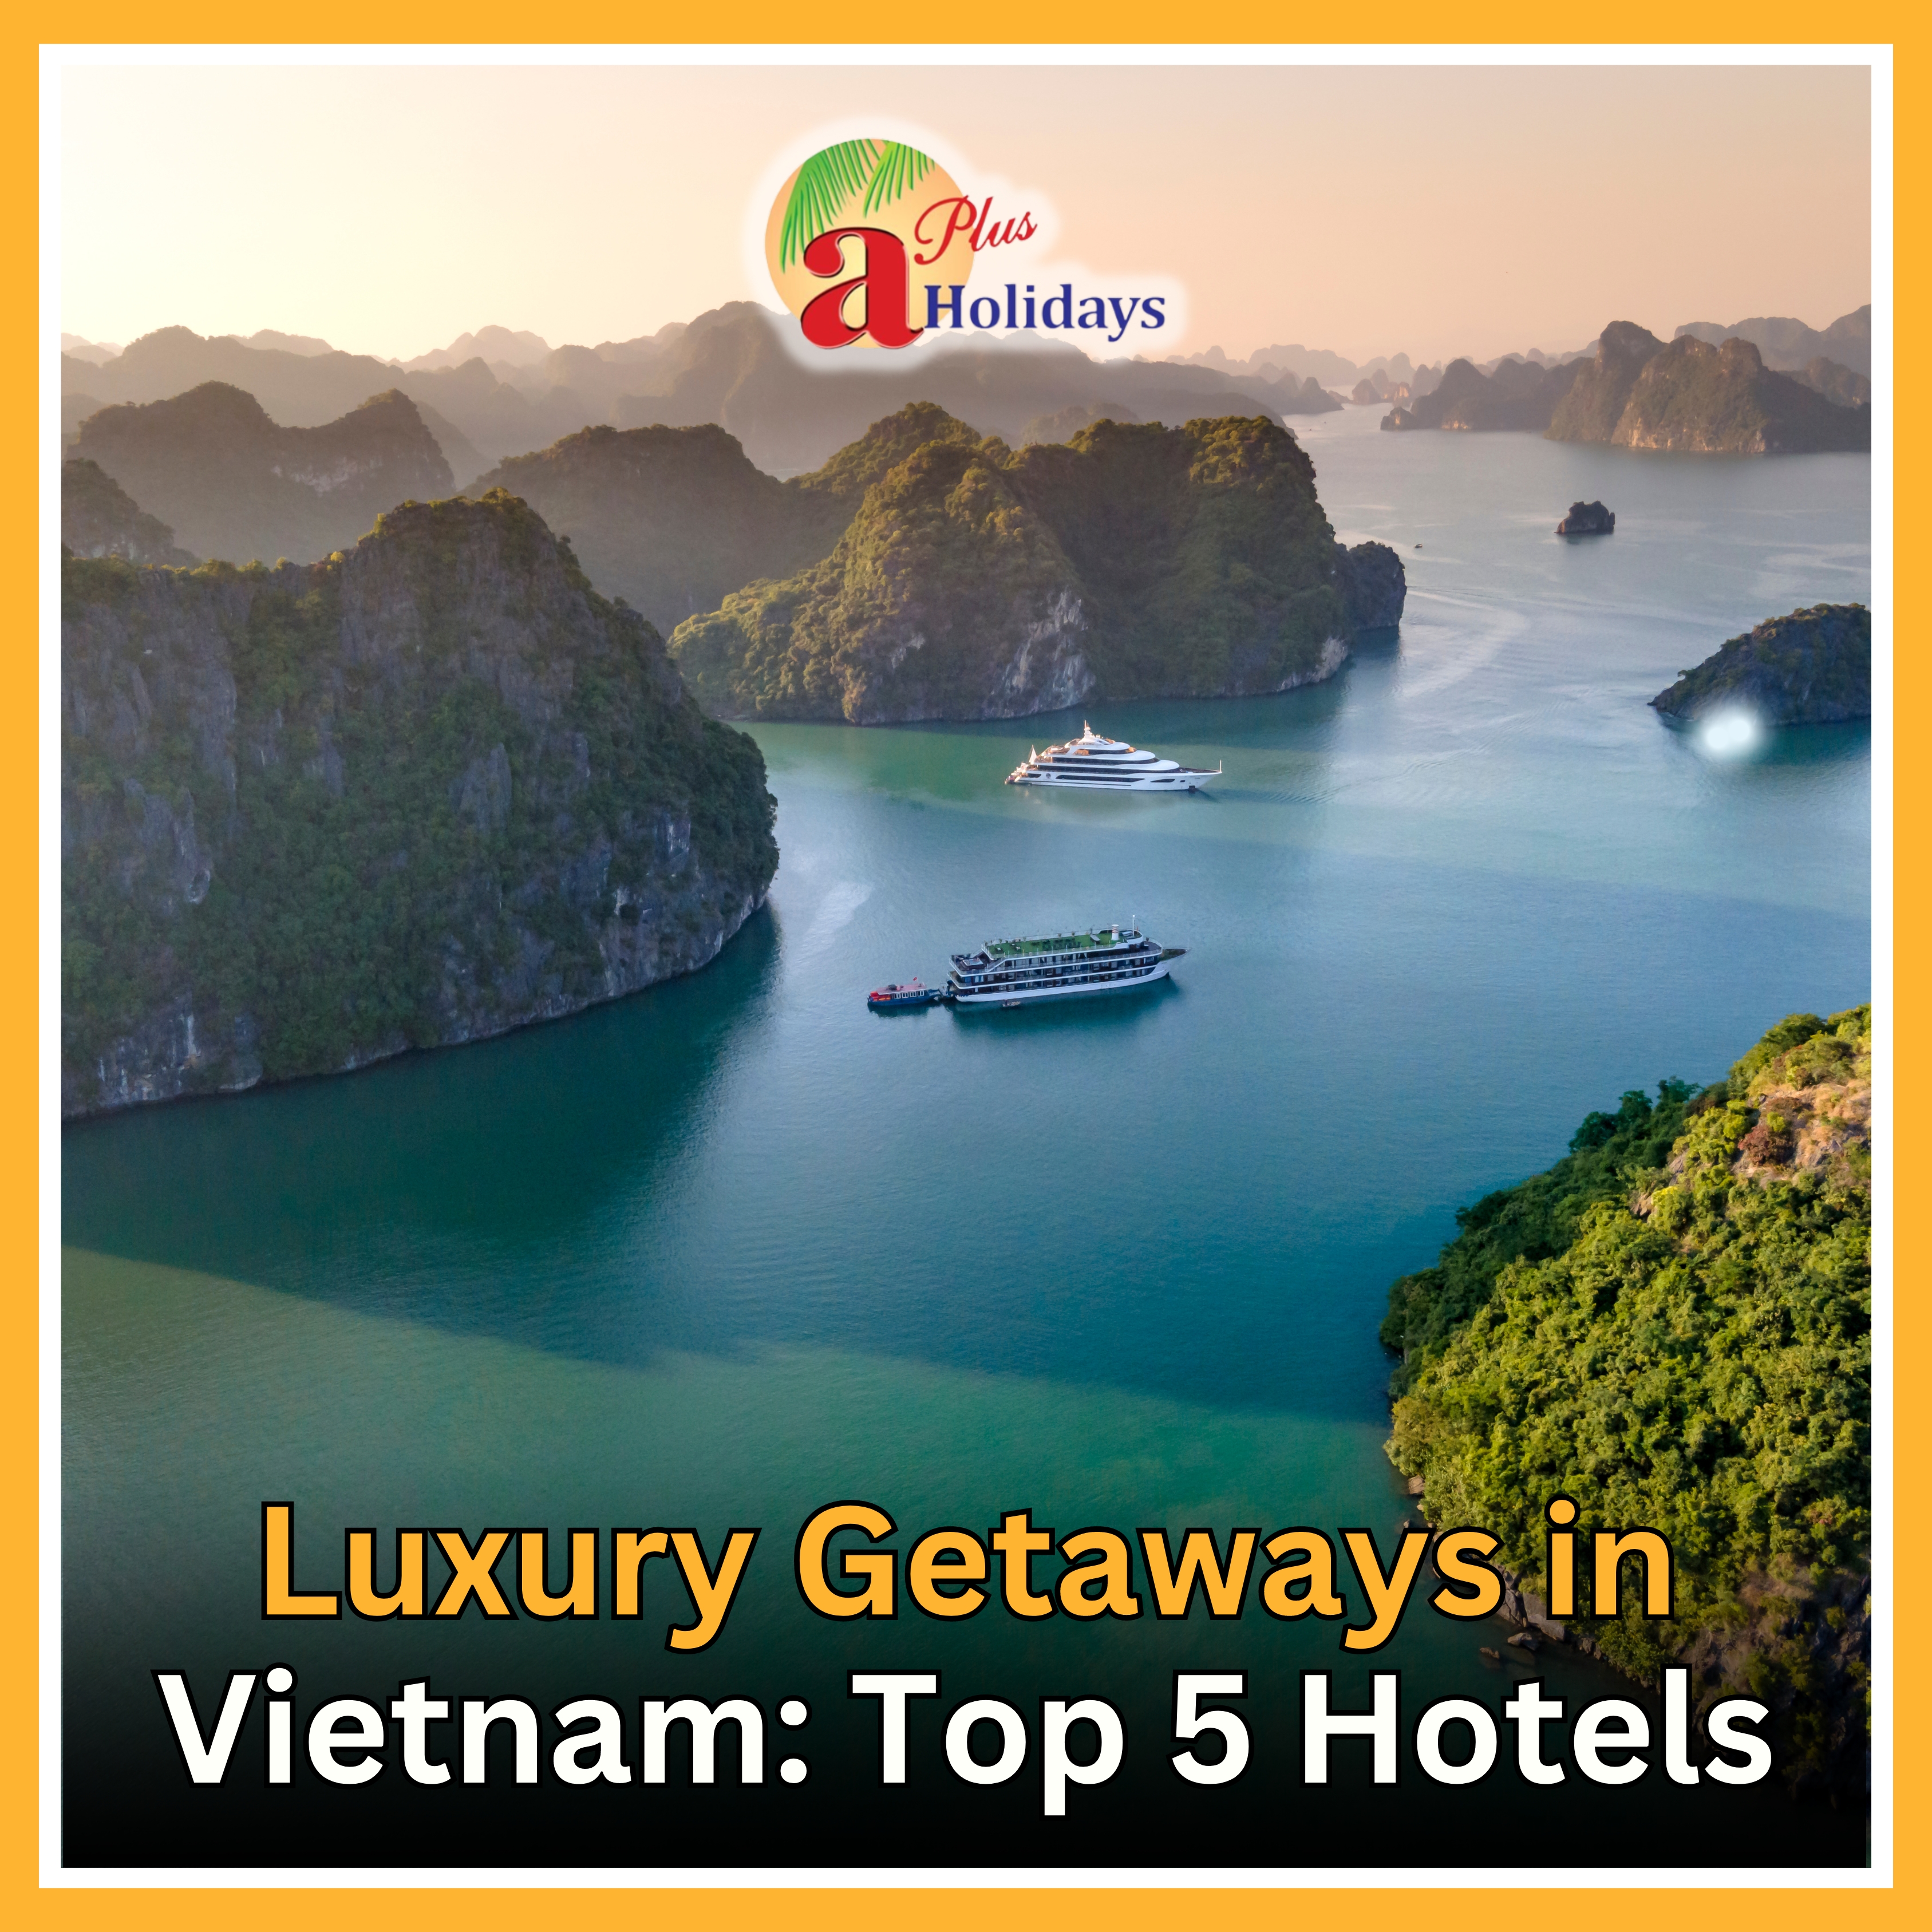 ndulgent Escapes in Vietnam Top 5 Hotels